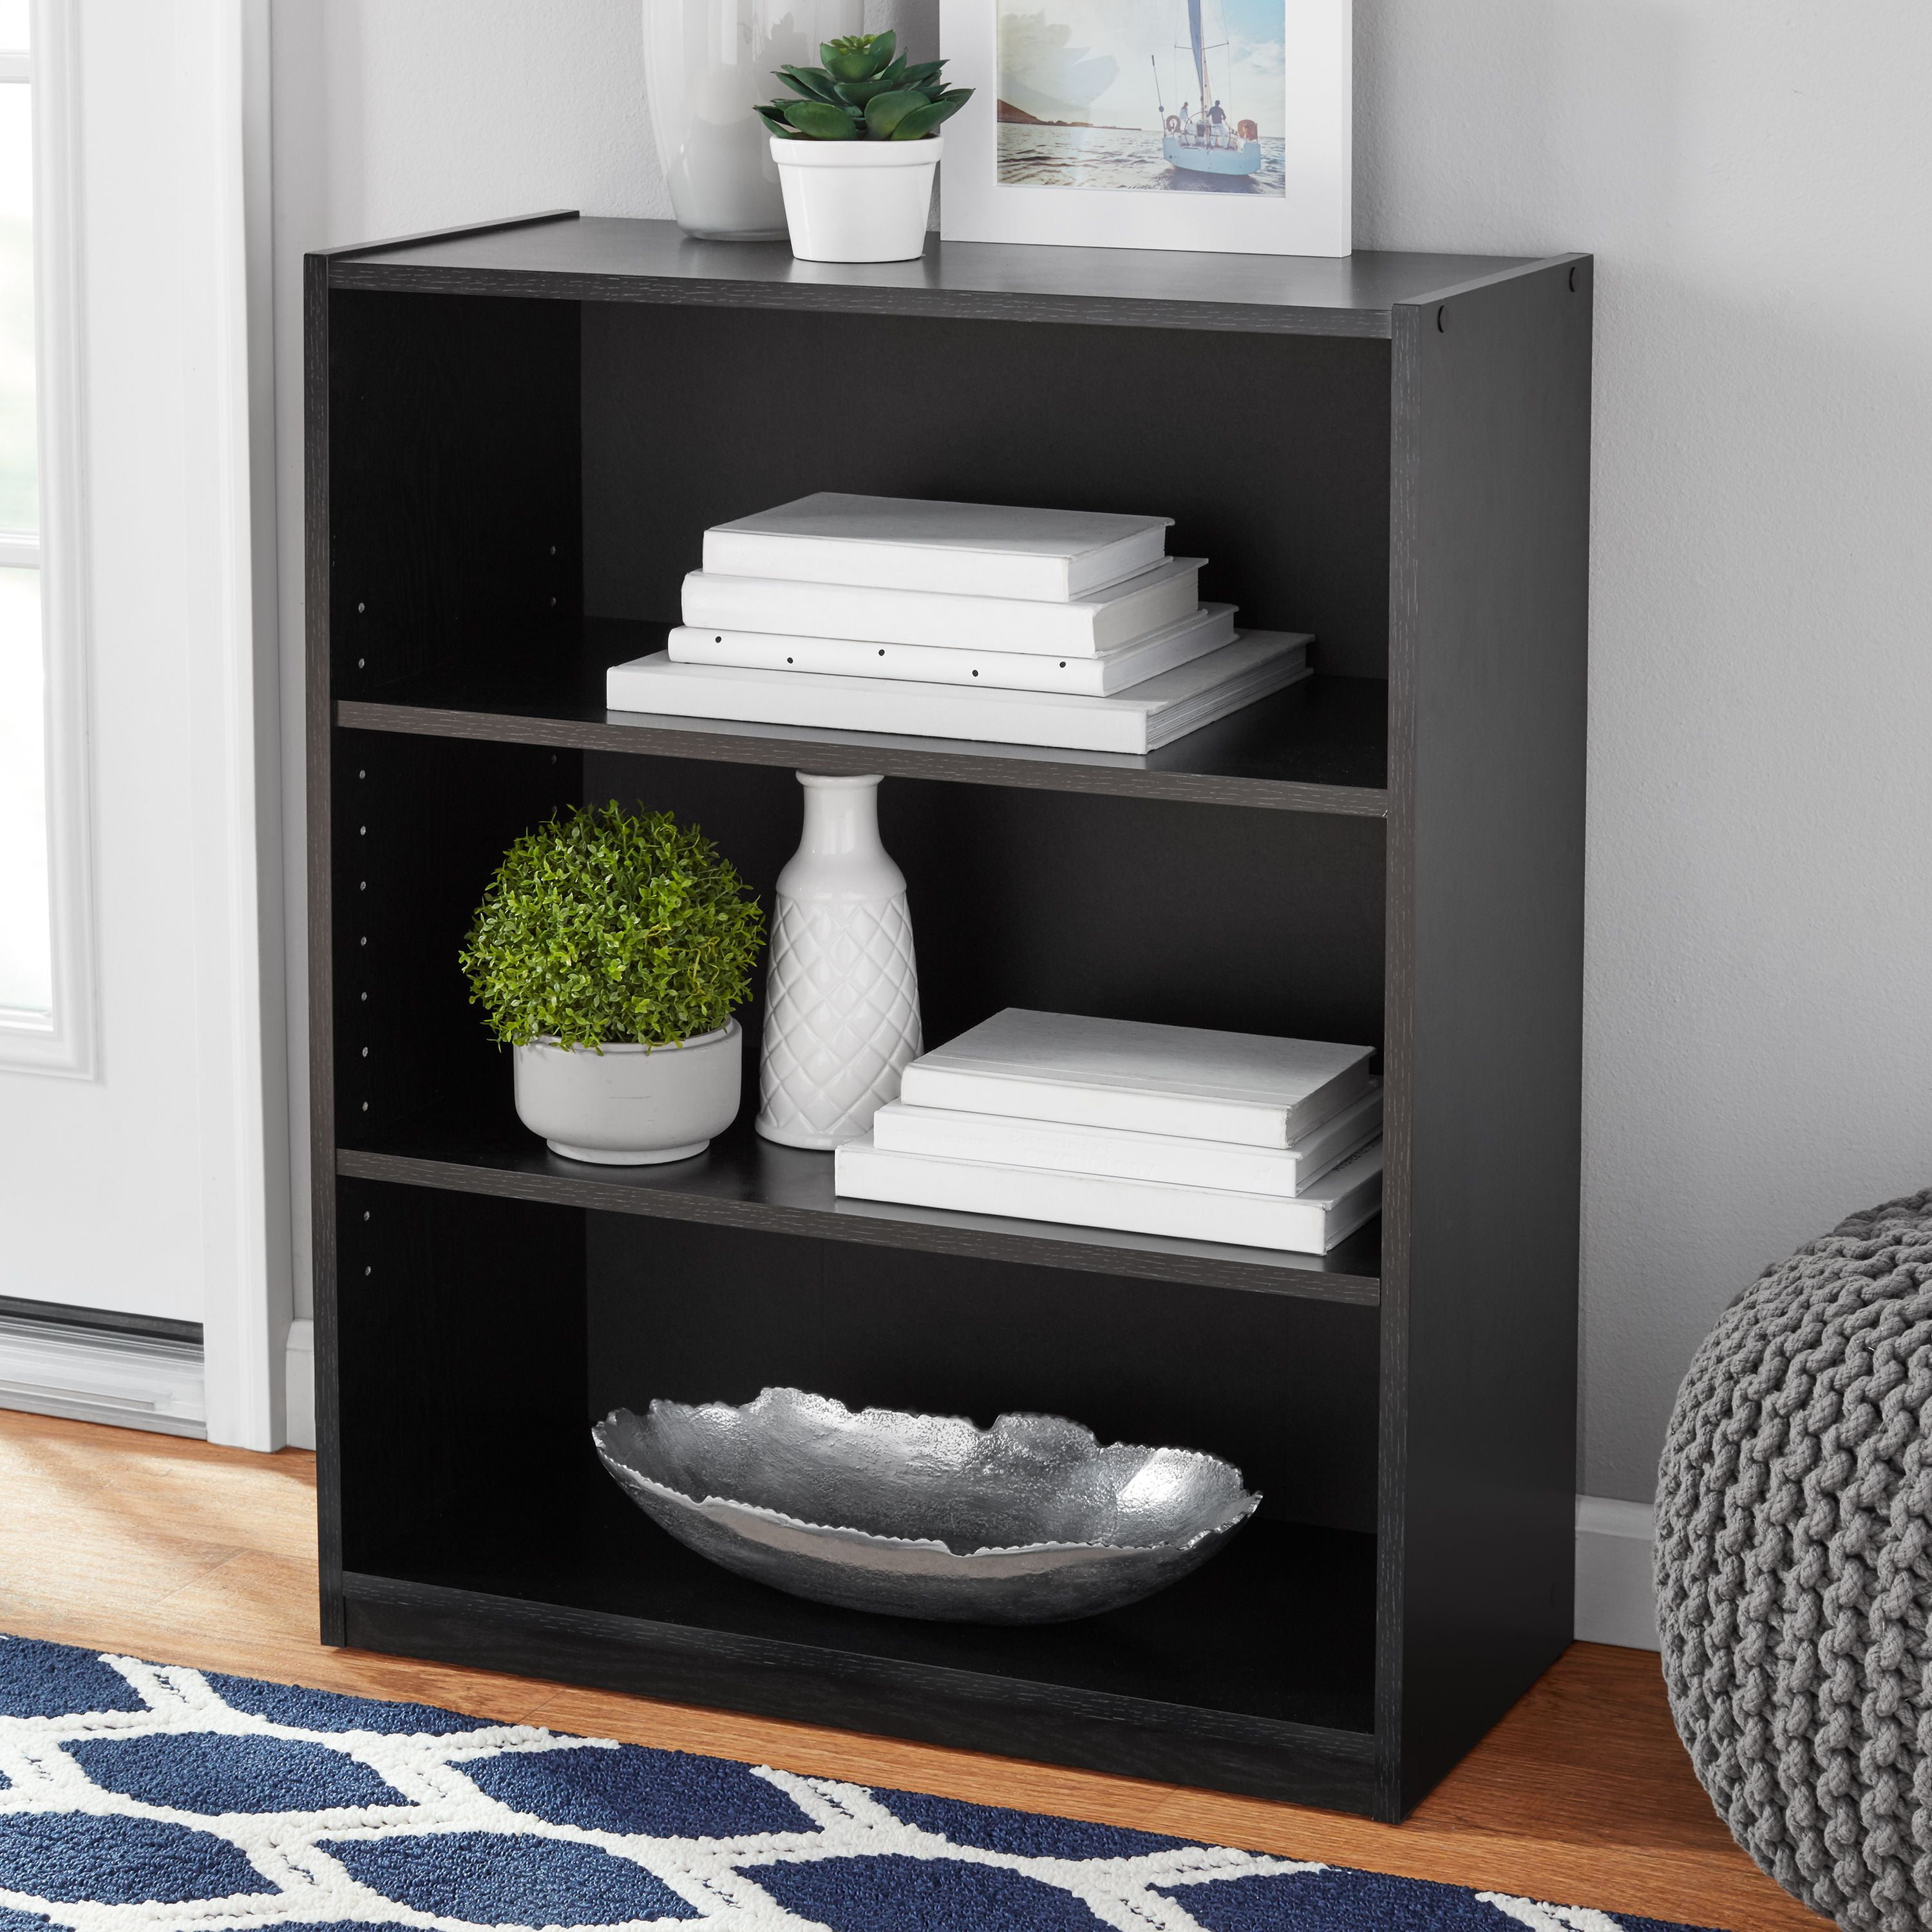 Minimalist 3 Shelf Bookcase for Large Space